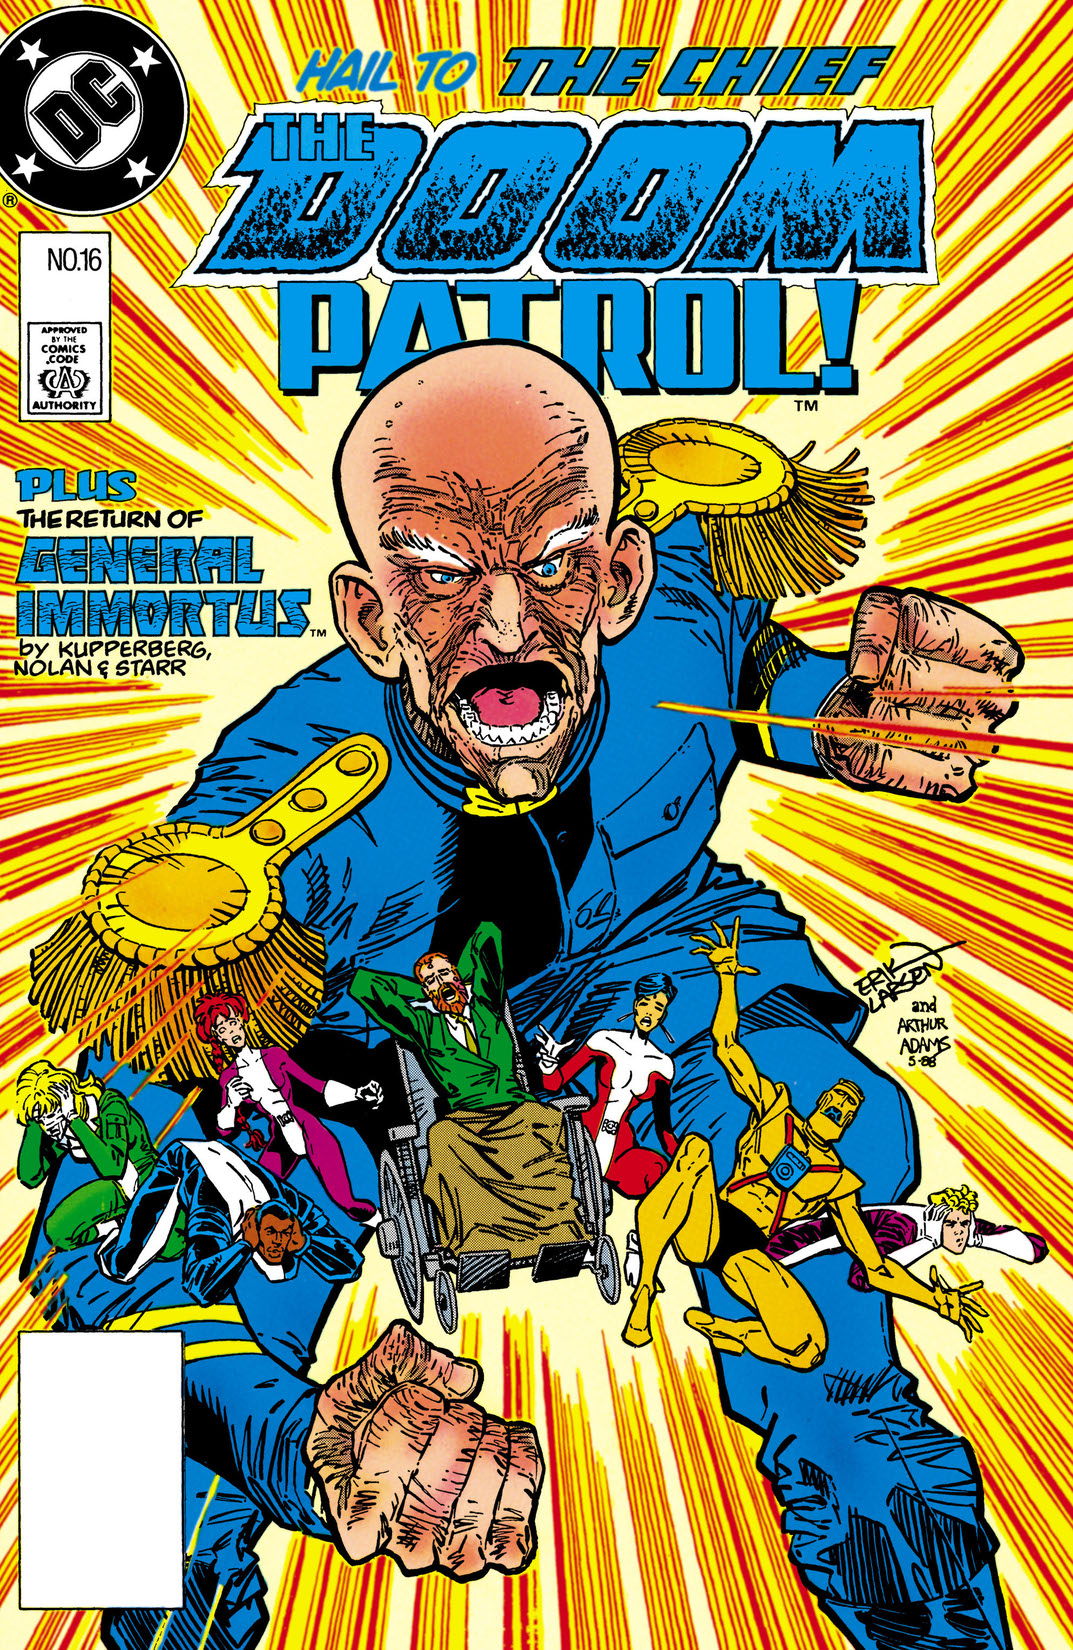 Doom Patrol (1987-) #16 preview images